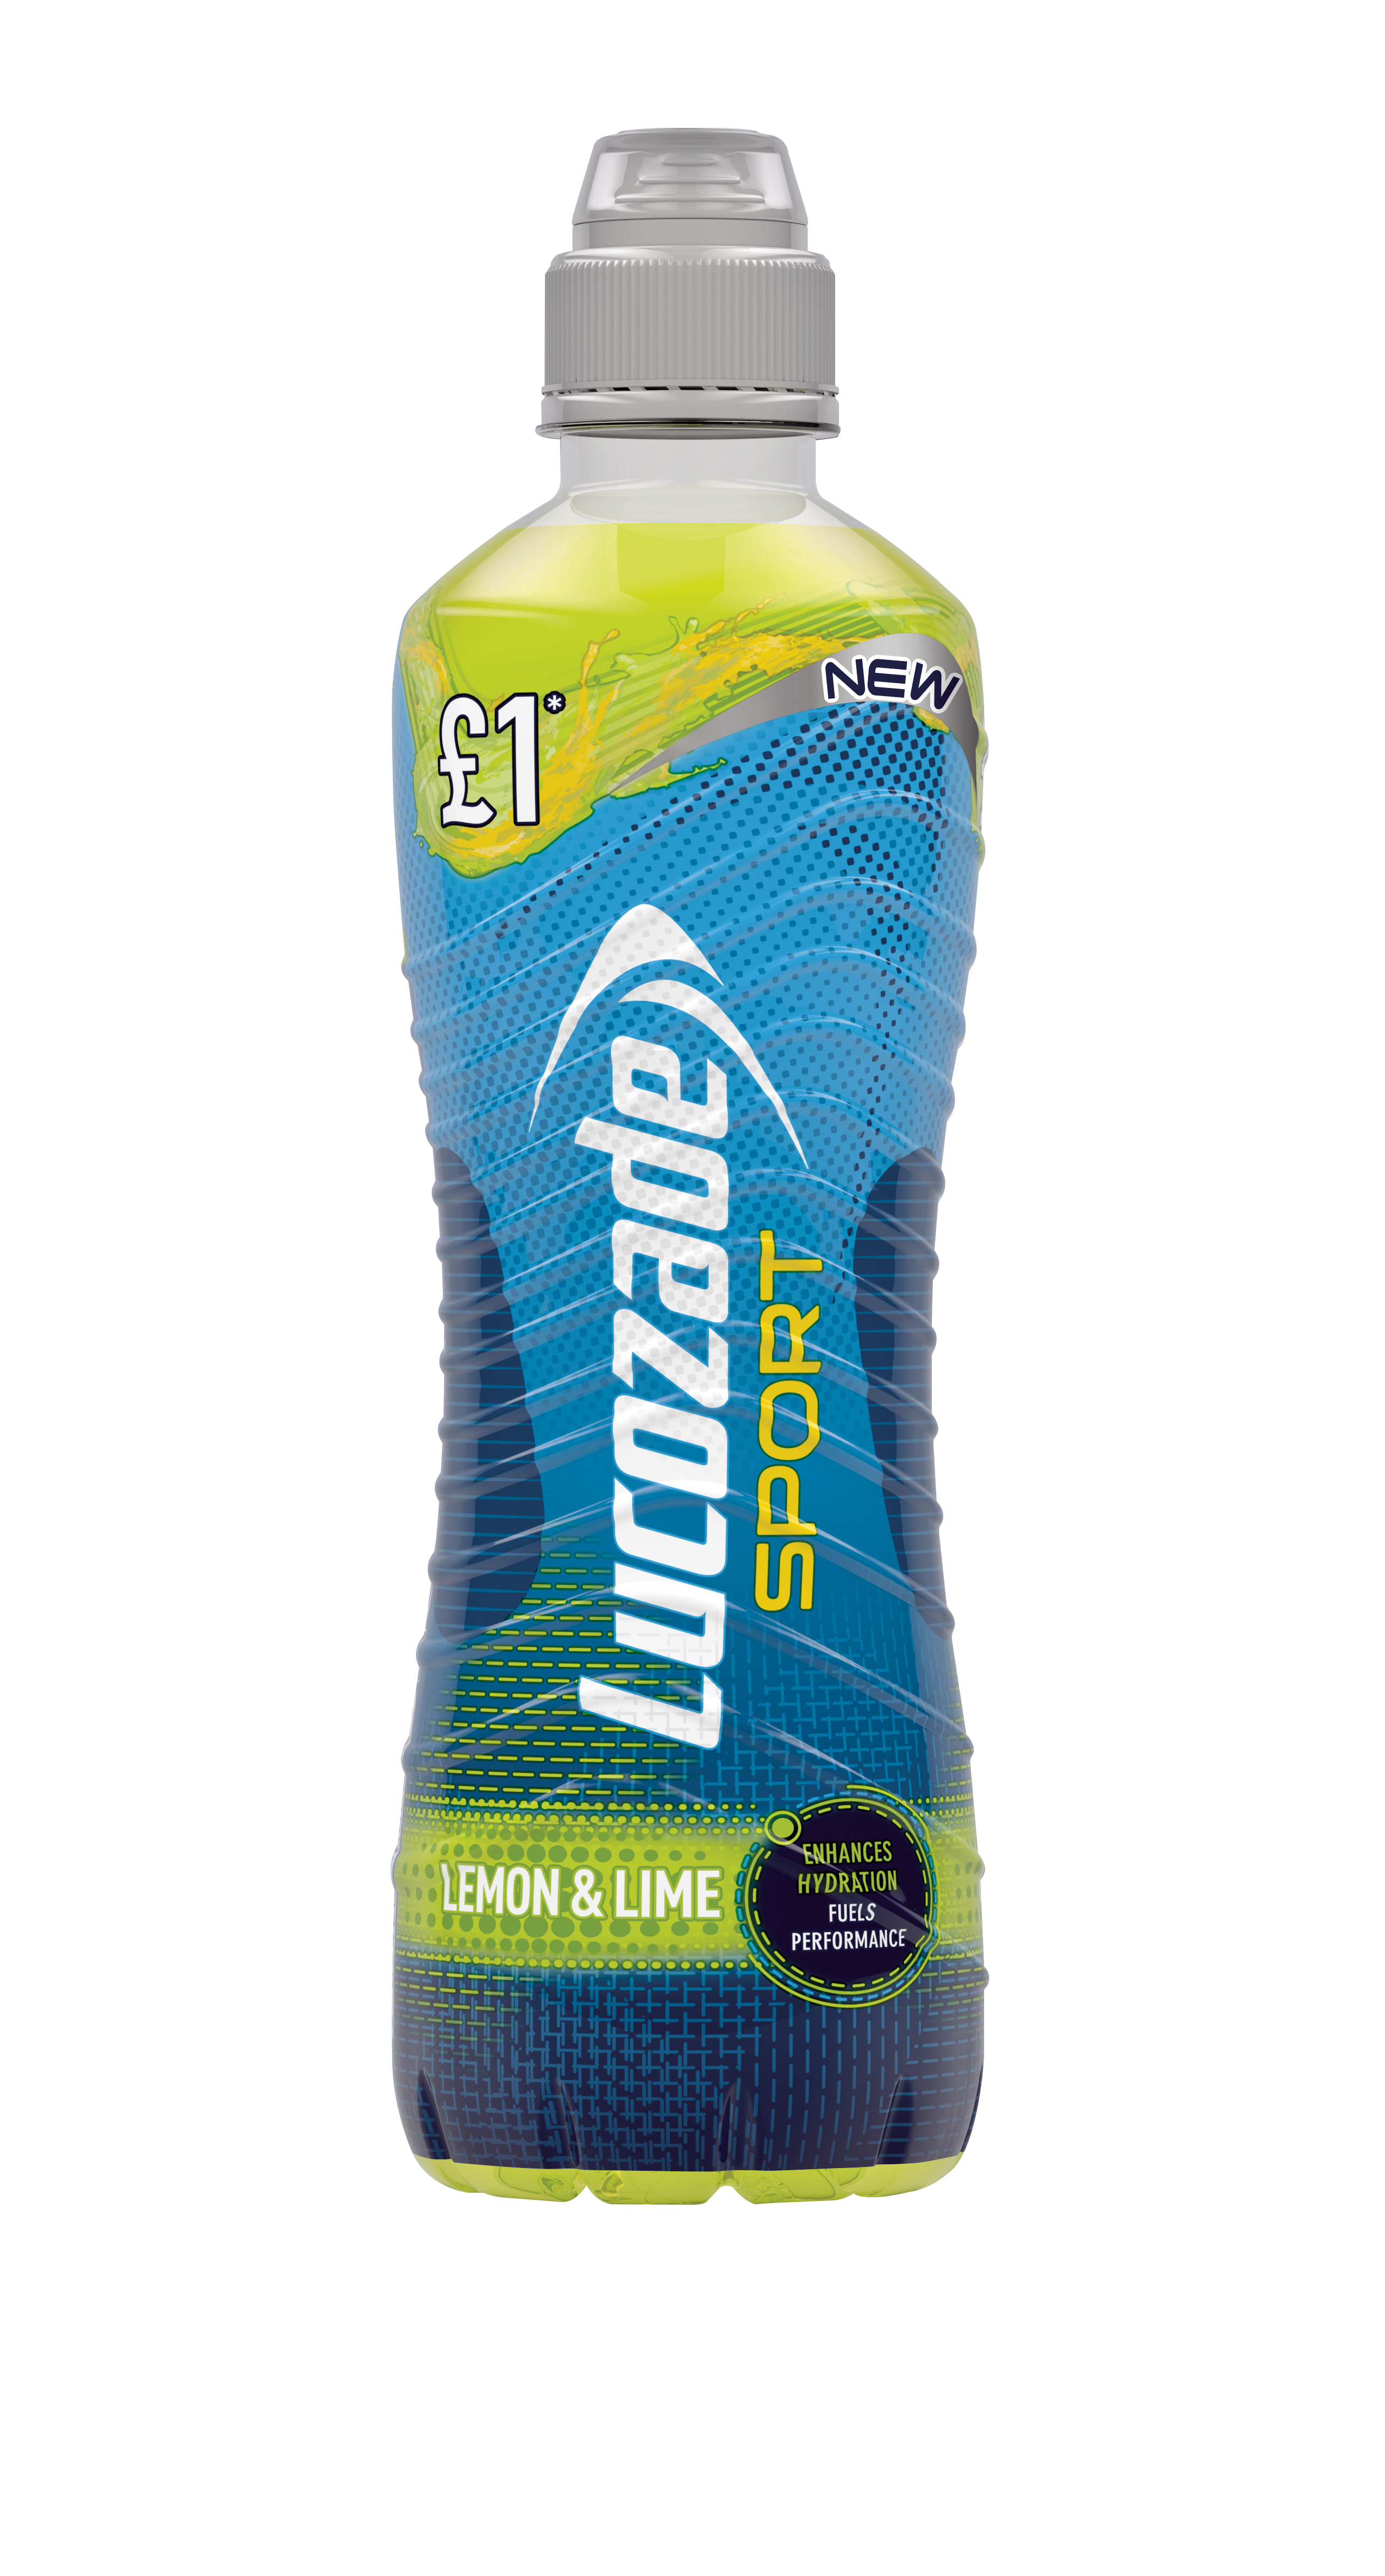 New Lemon & Lime flavour for Lucozade Sport